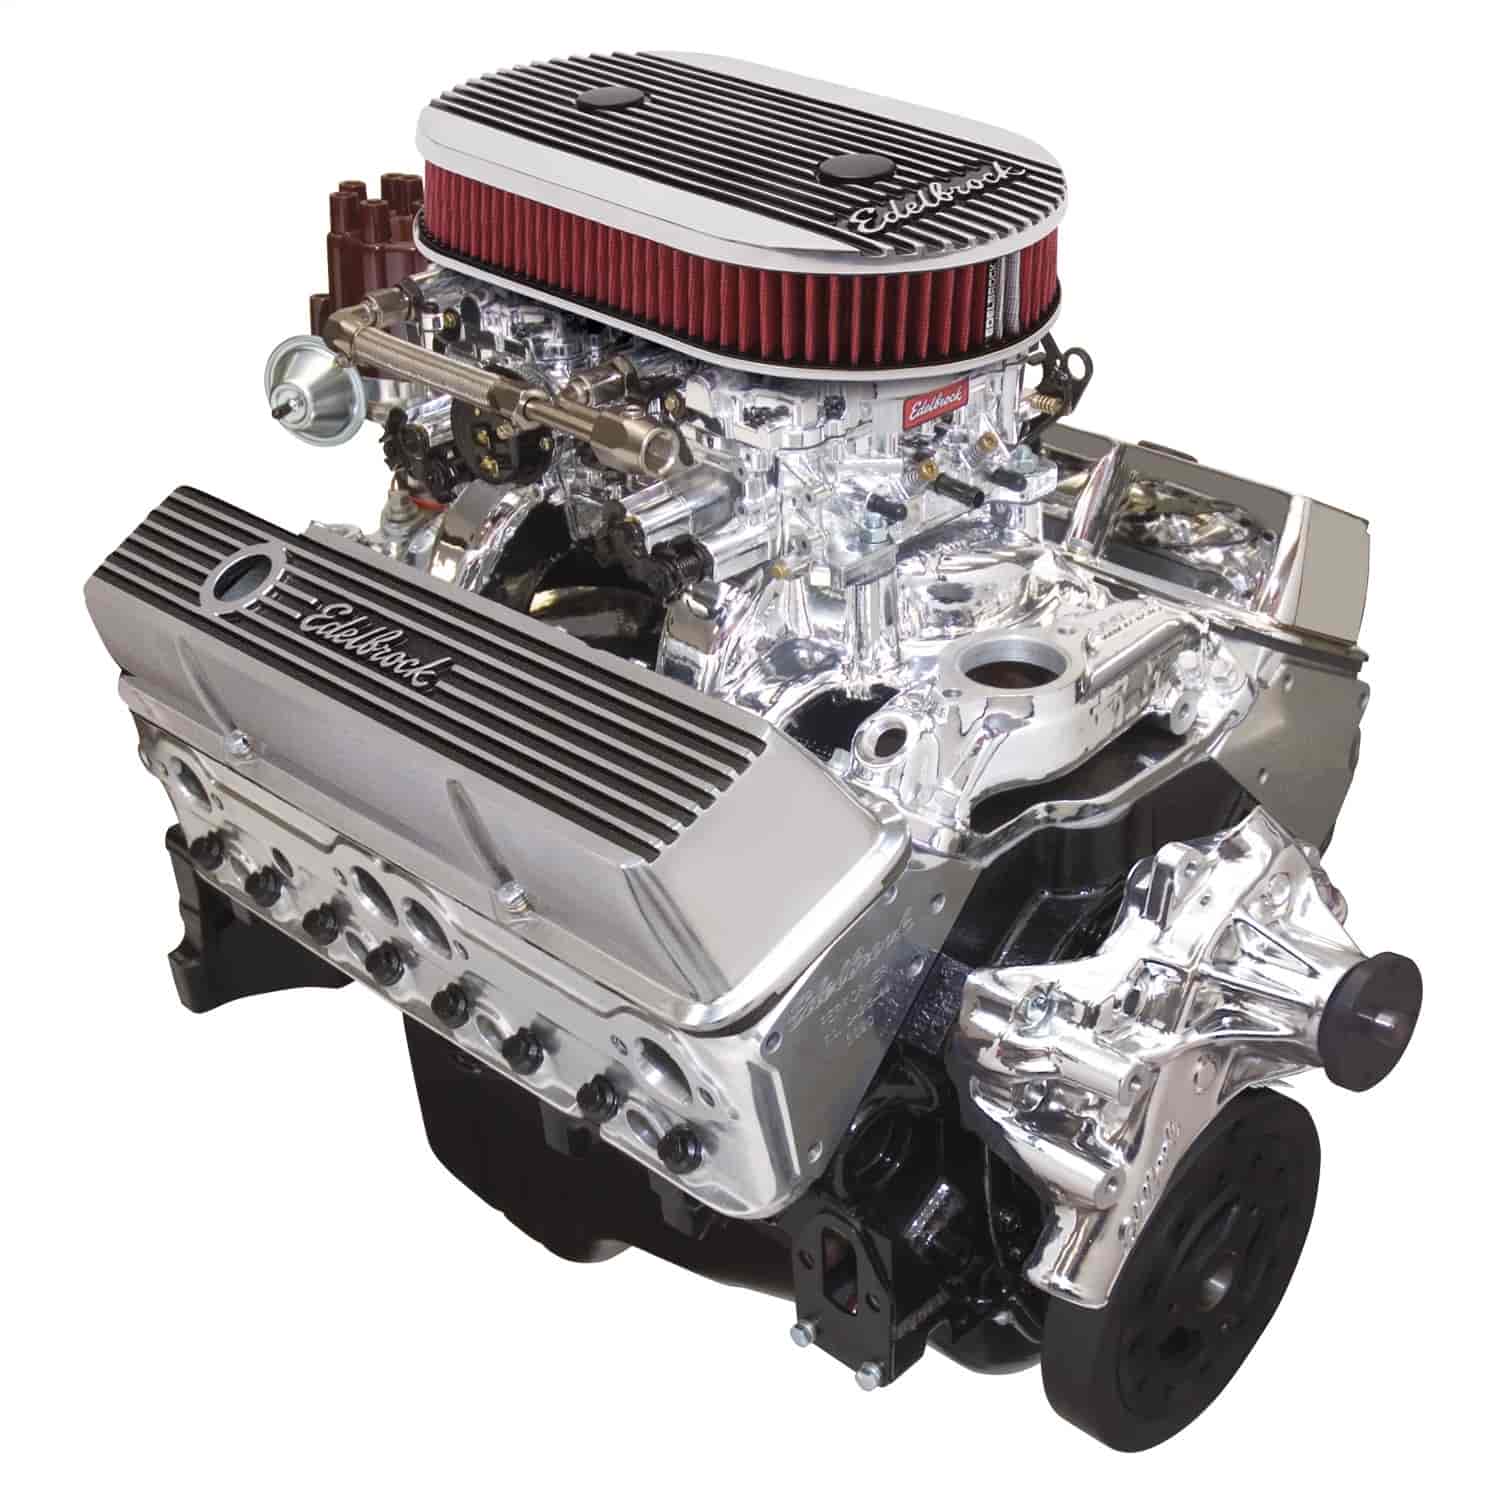 Performer Dual Quad SBC 350ci/315hp Crate Engine w/ RPM Air-Gap Manifold & Long Water Pump